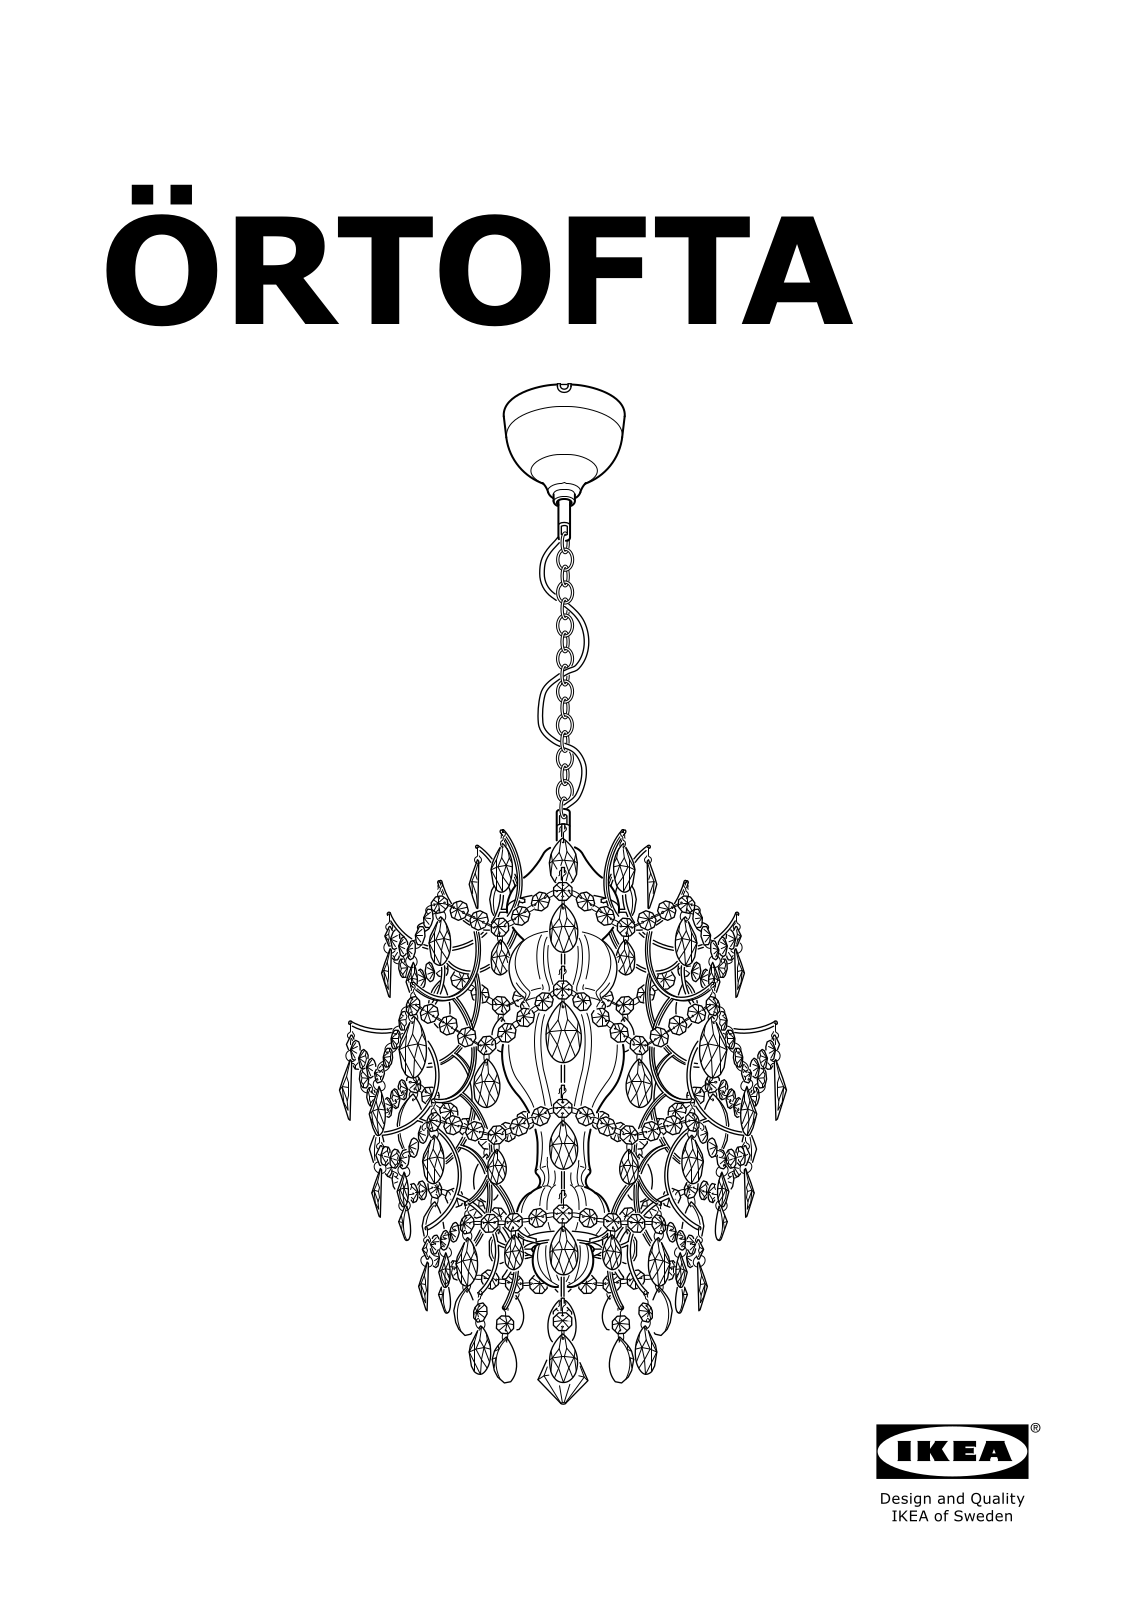 IKEA ORTOFTA User Manual